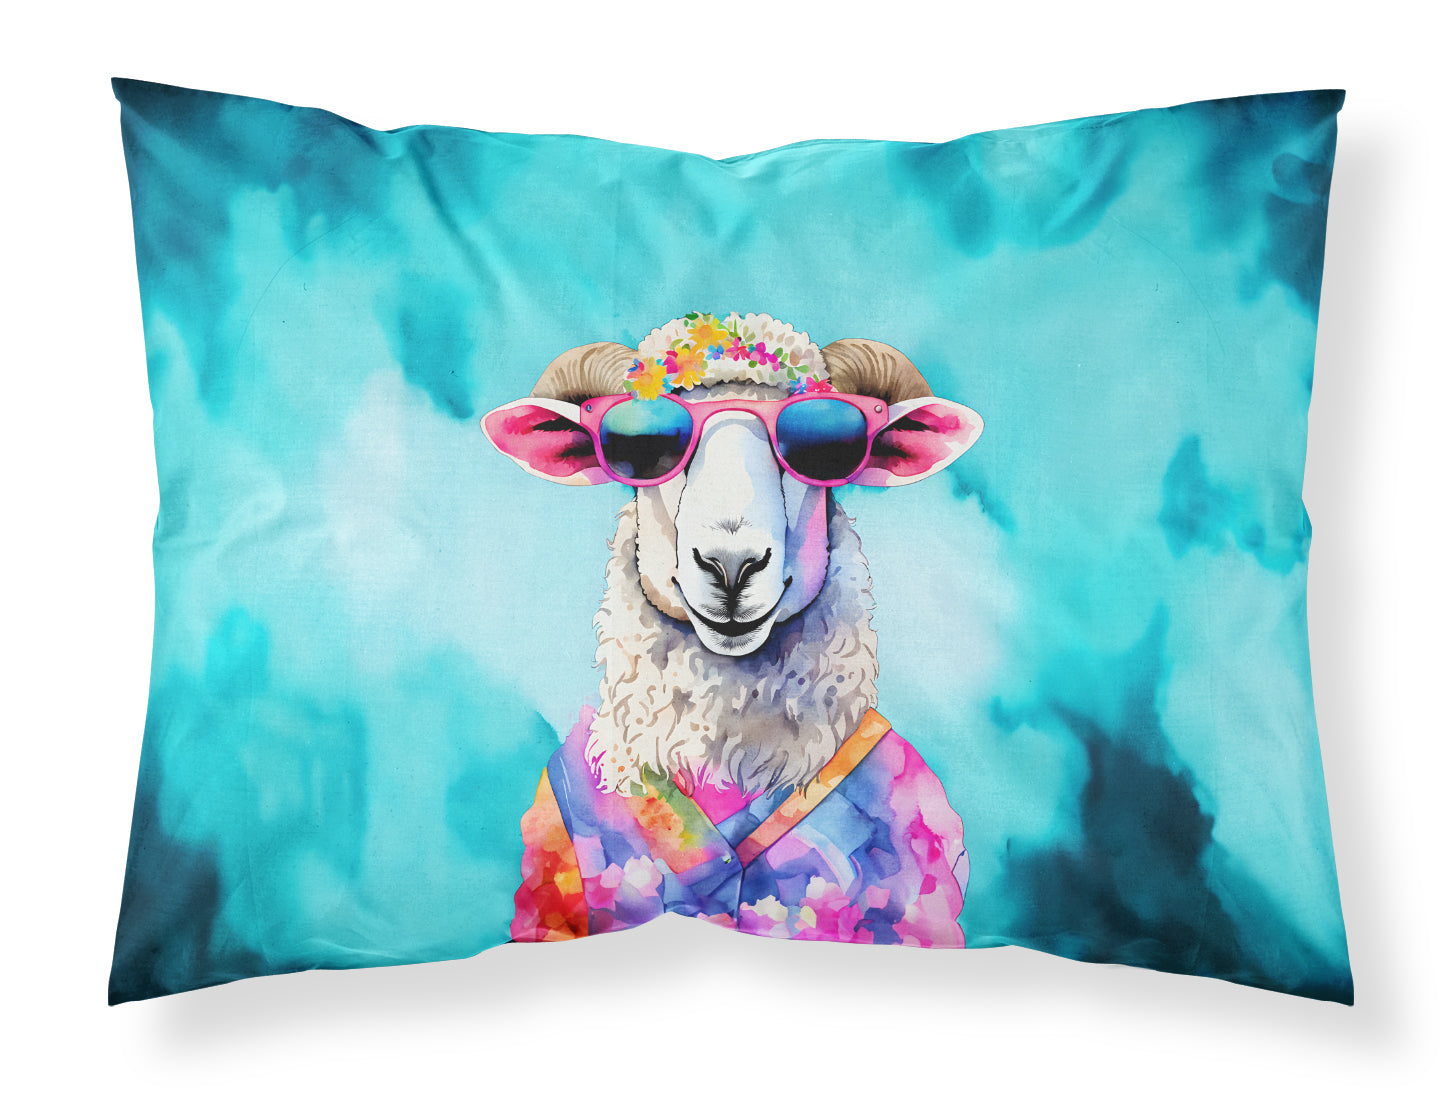 Buy this Hippie Animal Sheep Standard Pillowcase